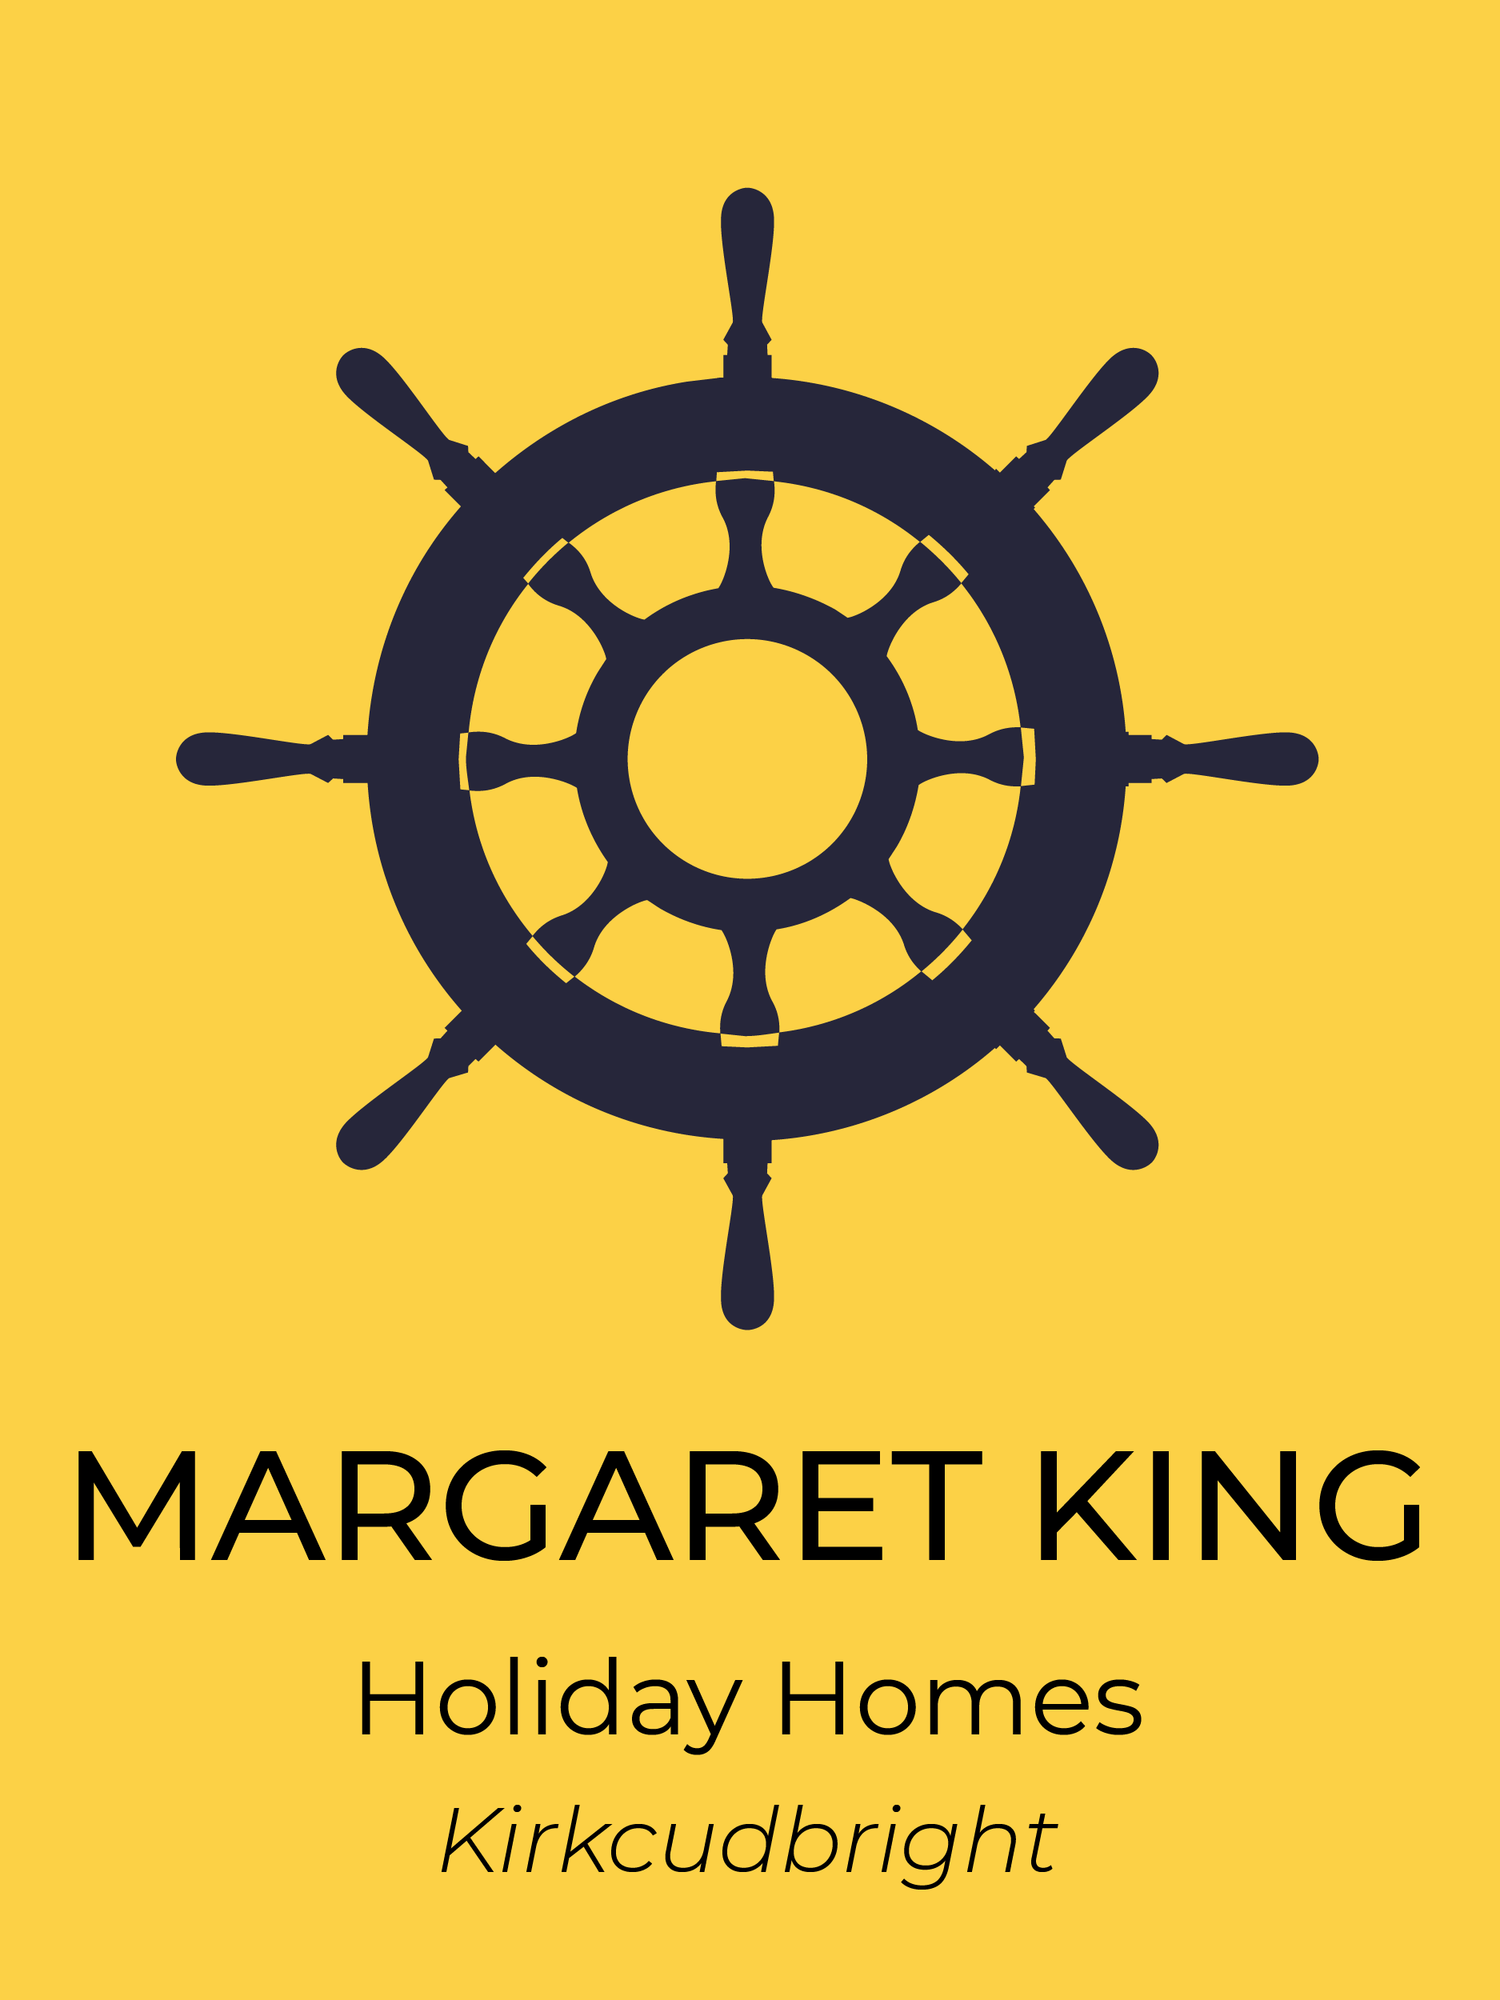 Margaret King Holiday Homes Kirkcudbright